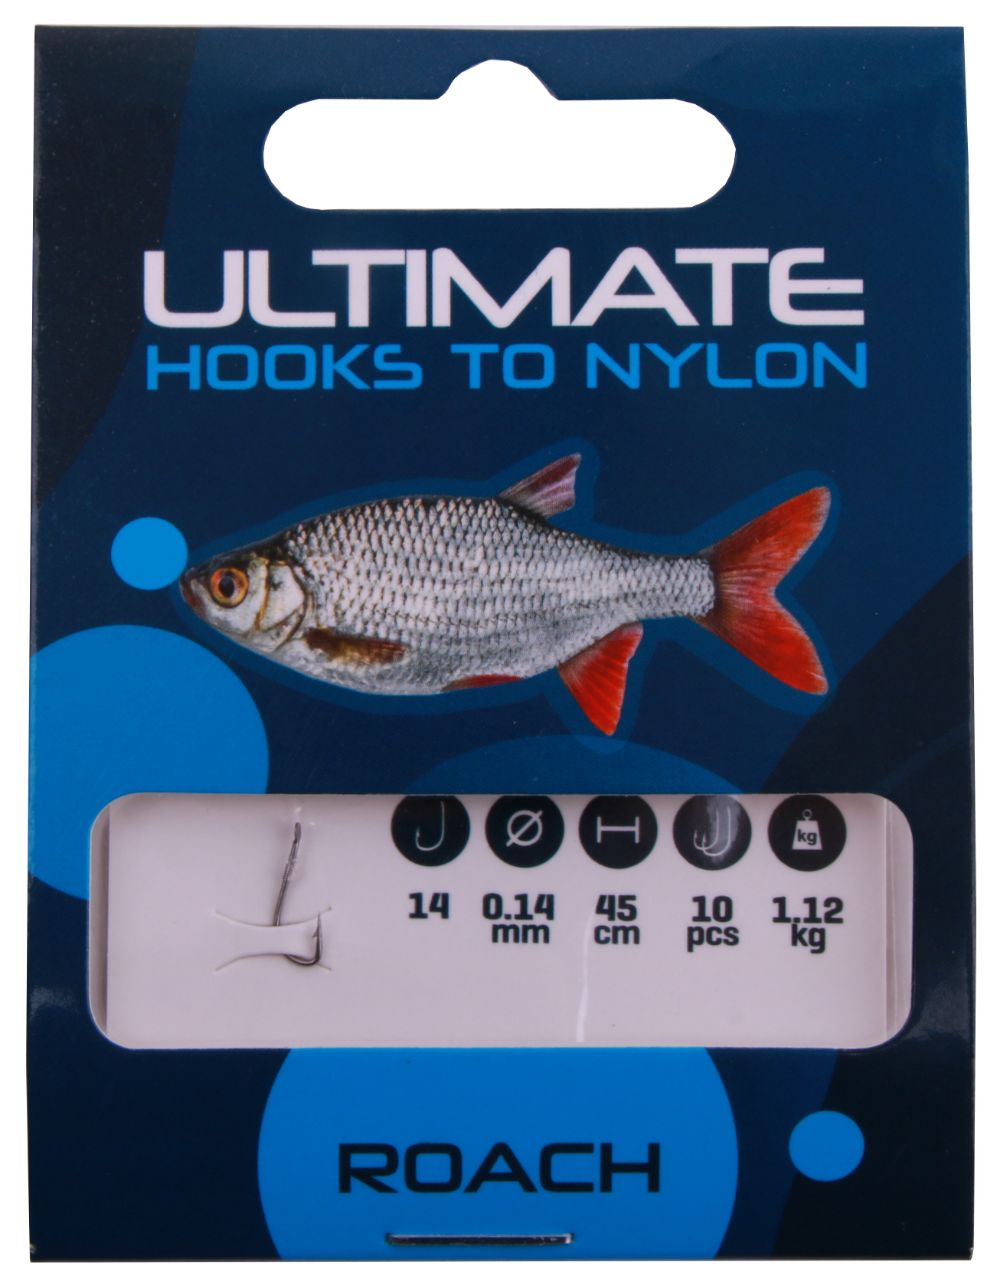 Ultimate hooks to nylon roach size 14 0,14mm 45cm 10pcs